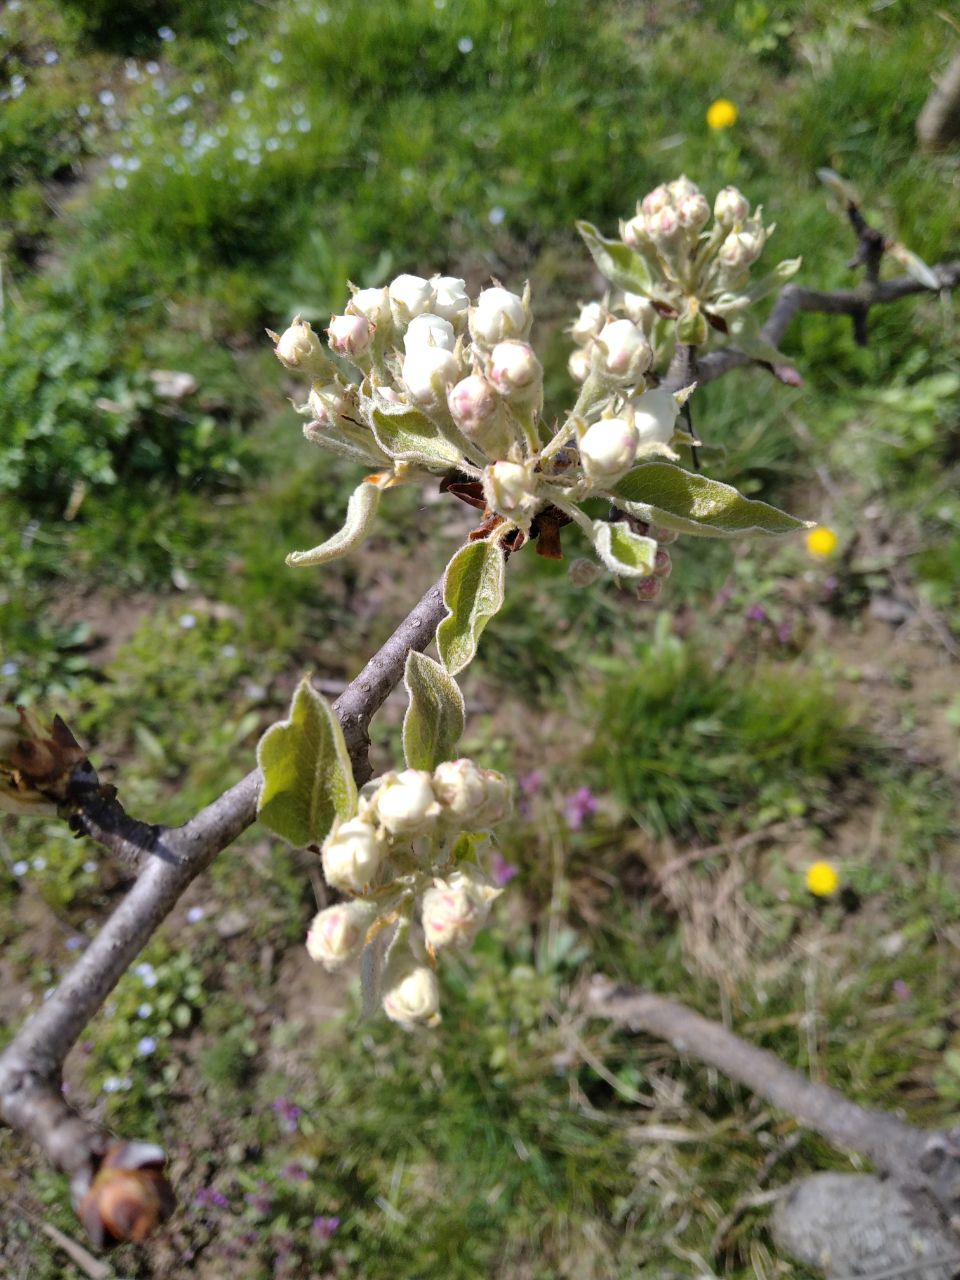 pear tree flowers